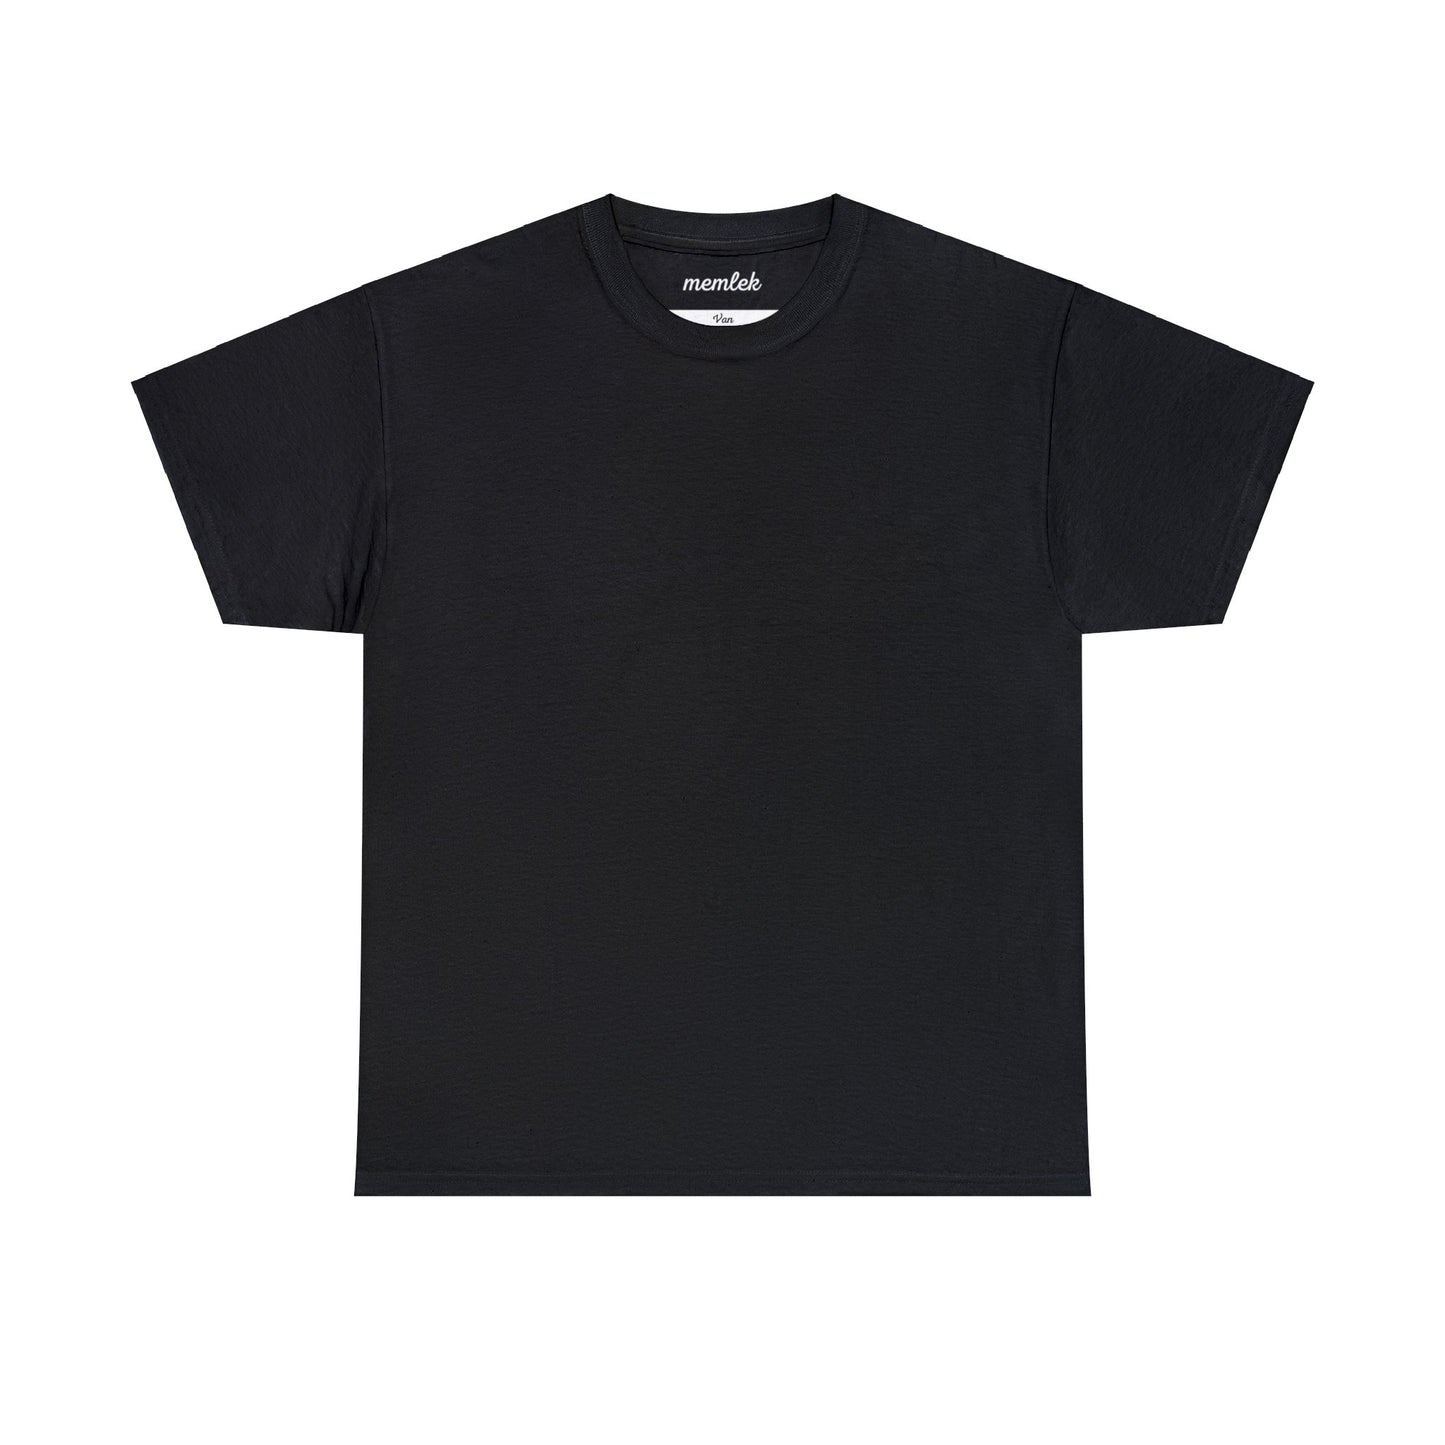 Kurt - 65 Van - T-Shirt - Back Print - Black/White